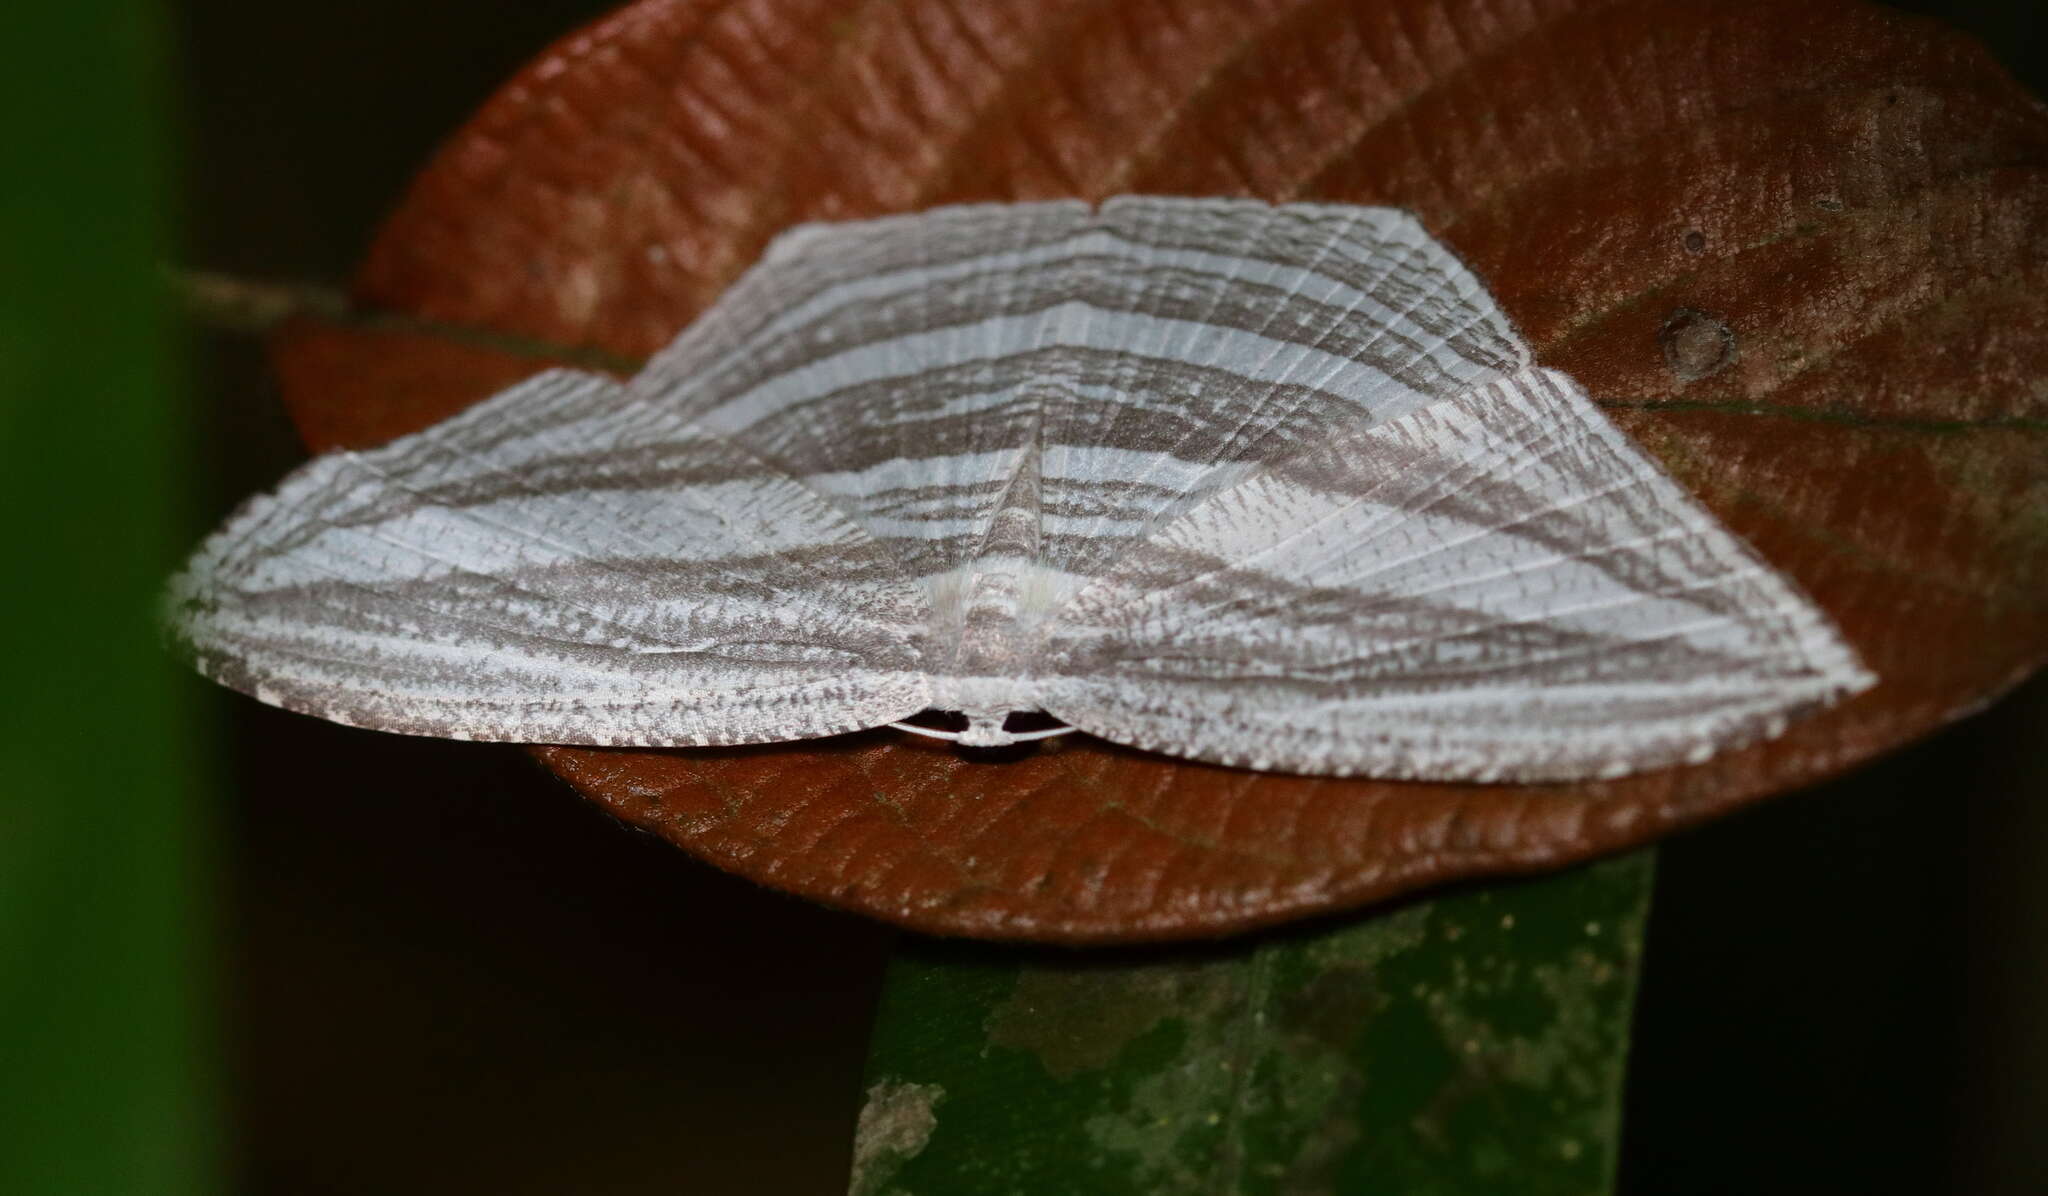 Image of Acropteris rectinervata Guenée